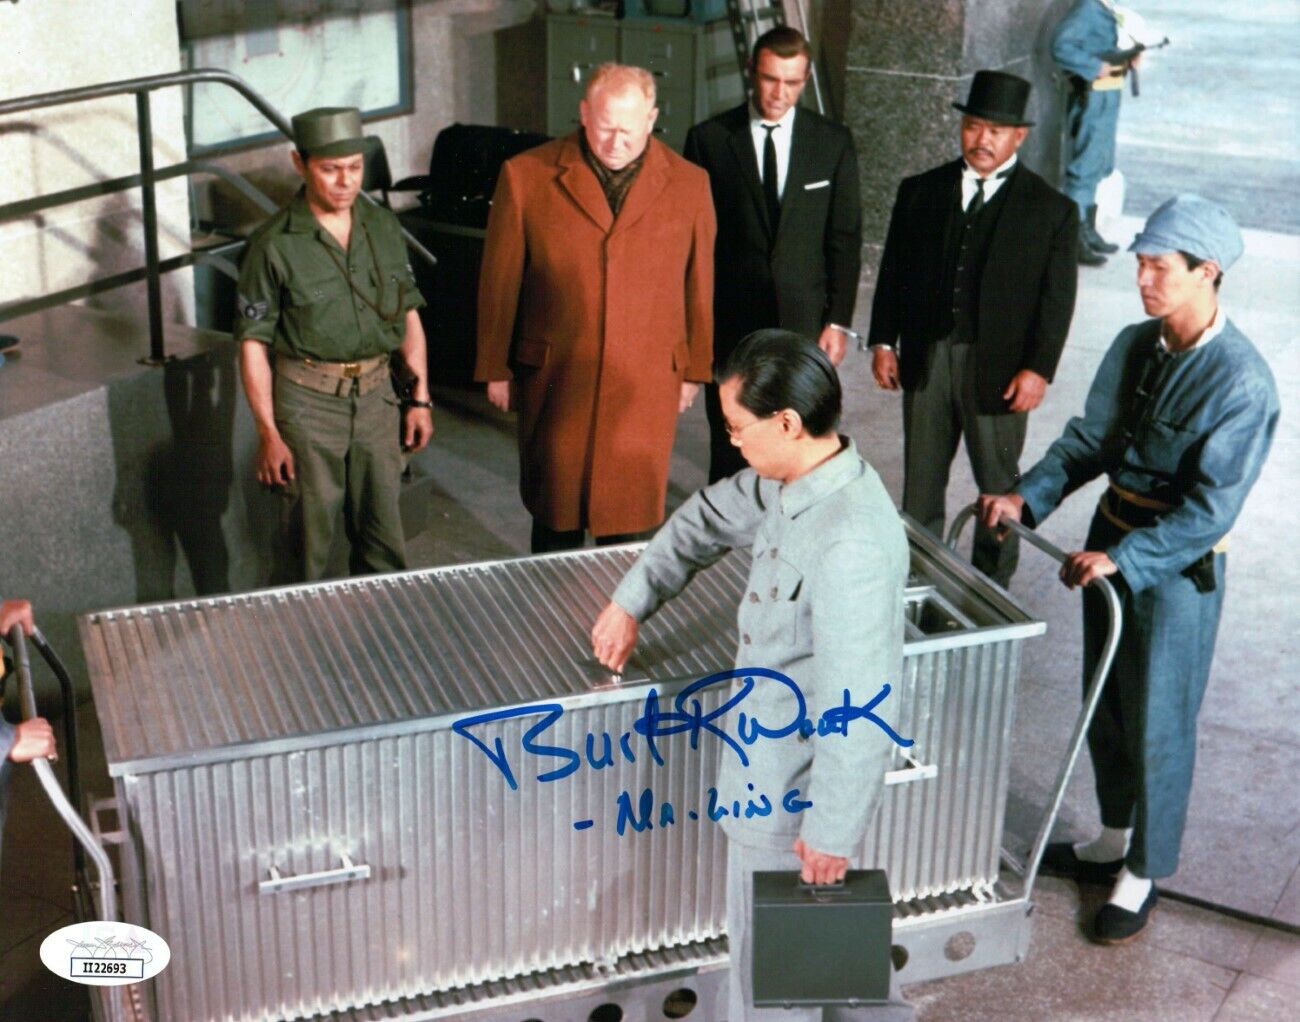 Burt Kwouk Signed Autographed 8X10 Photo Poster painting James Bond Goldfinger Ling JSA II22693